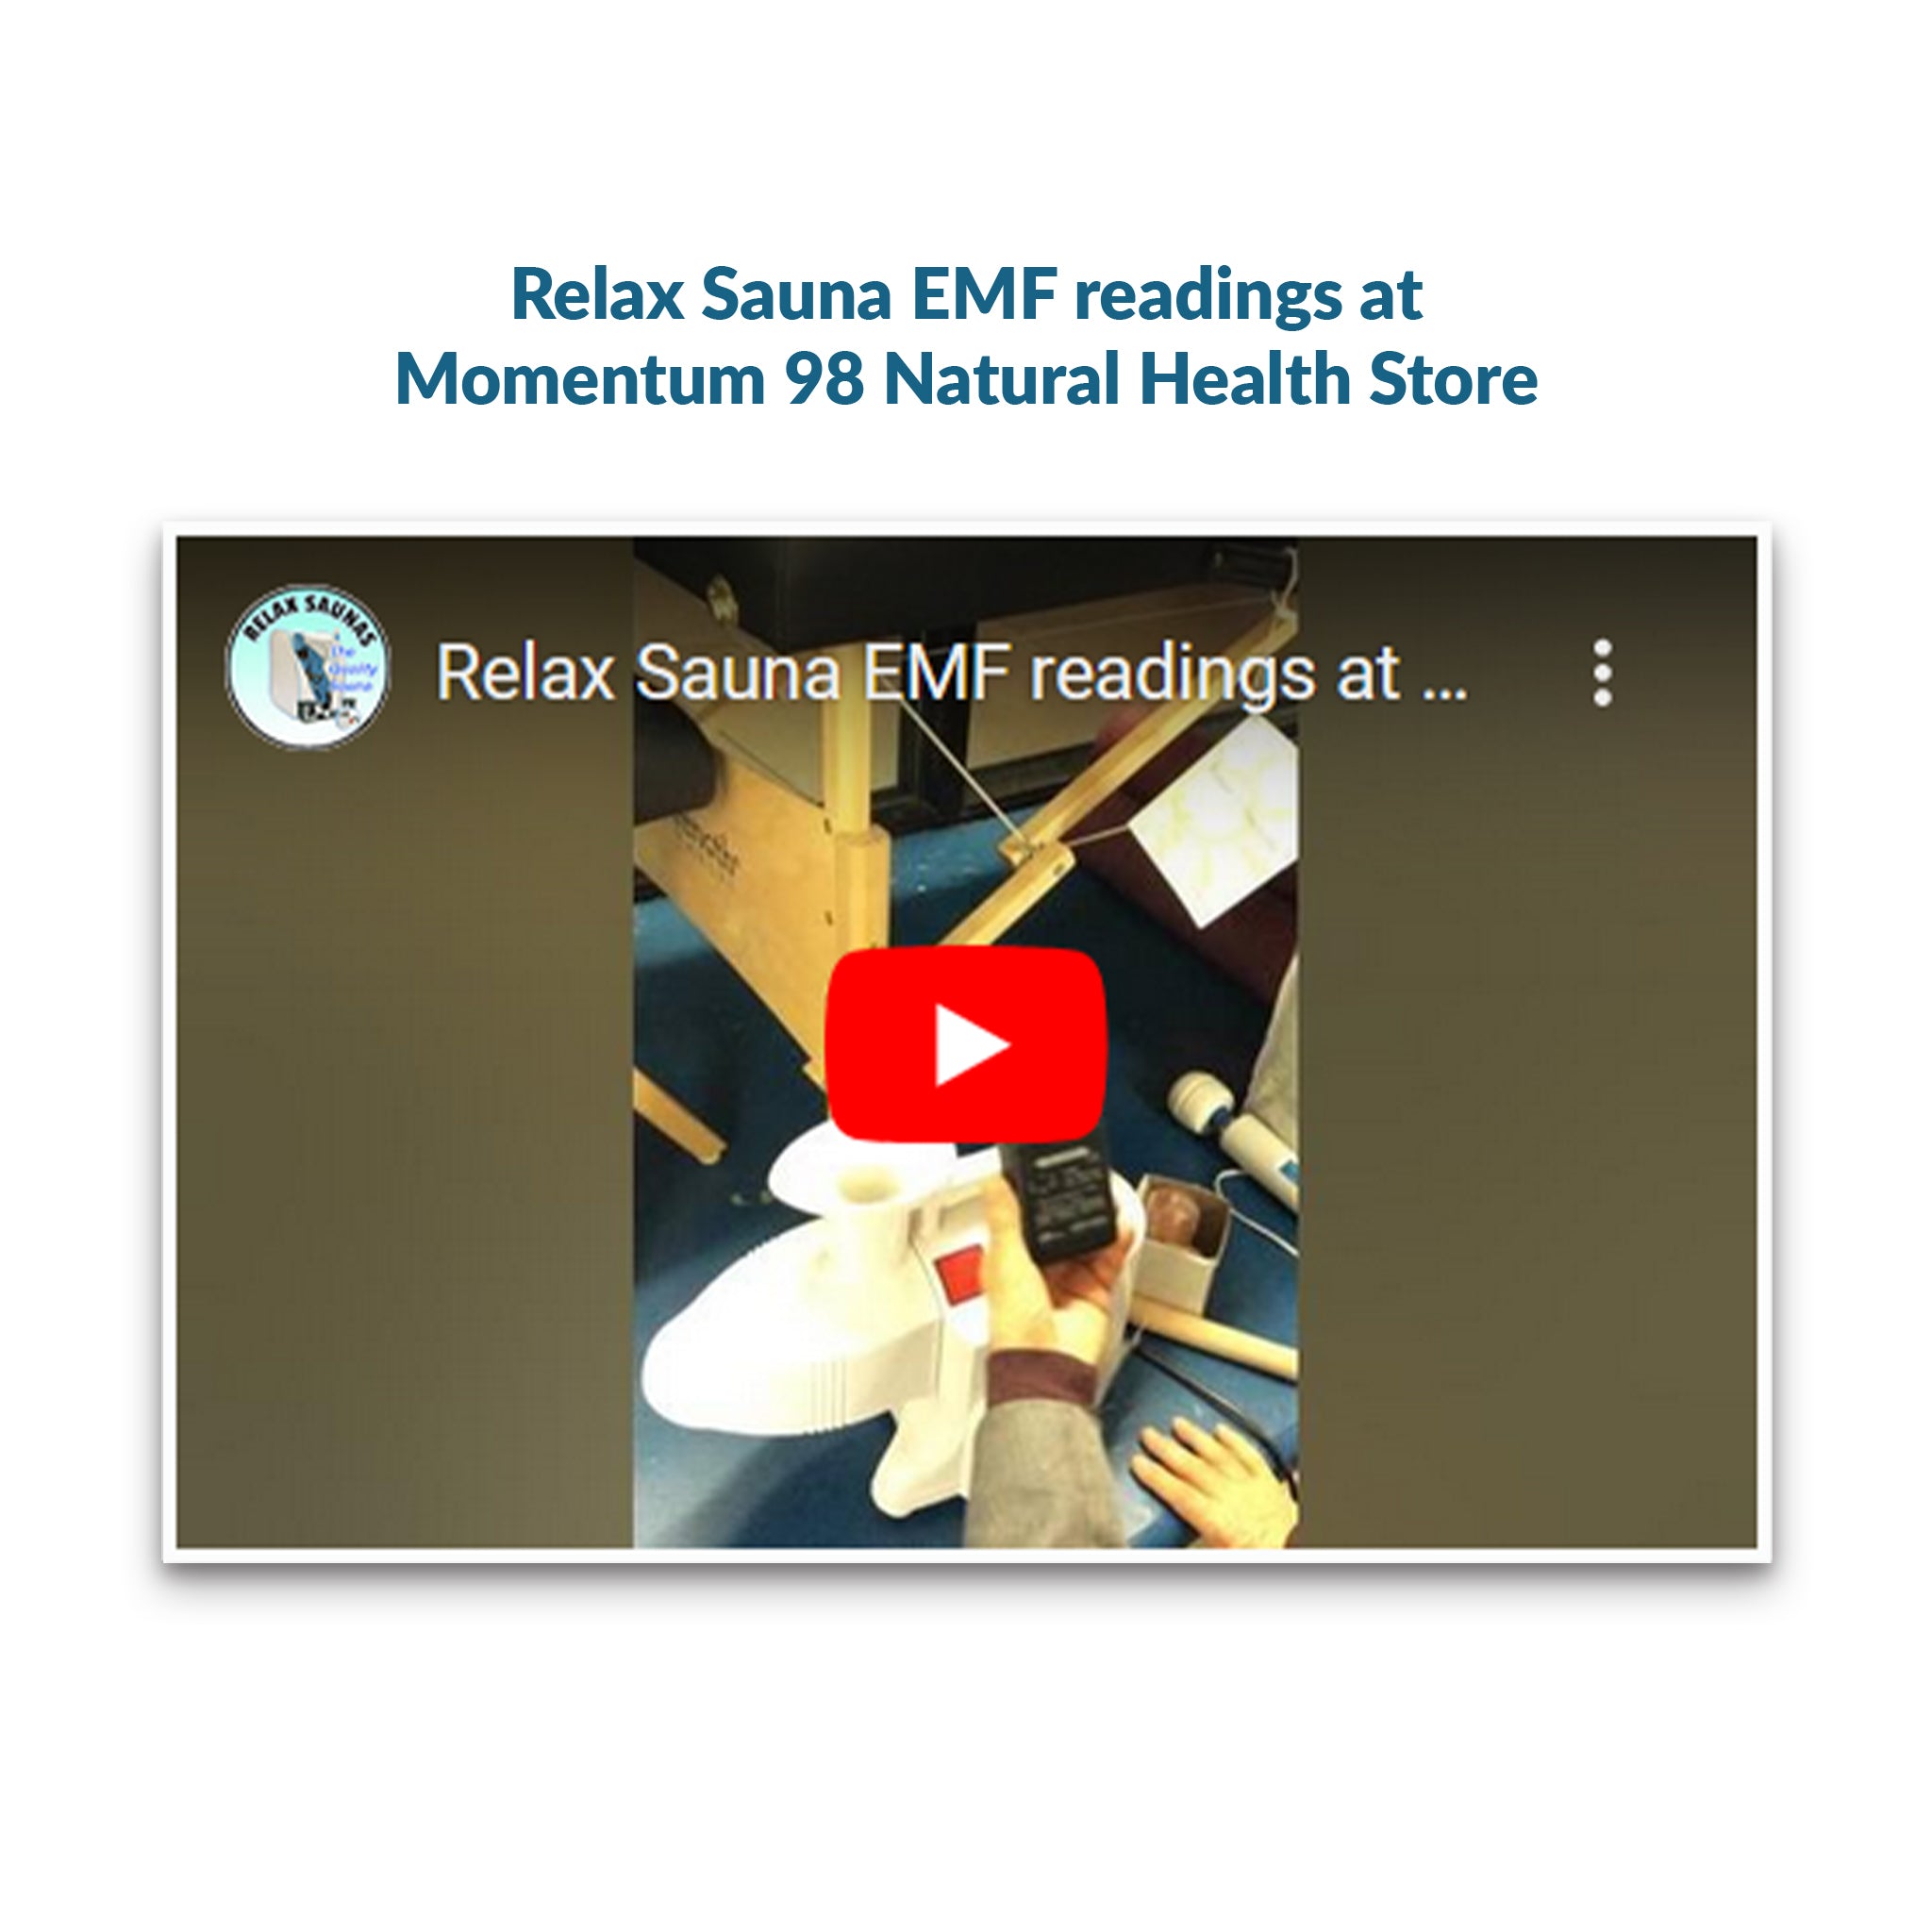 Relax Sauna EMF readings at Momentum 98 Natural Health Store